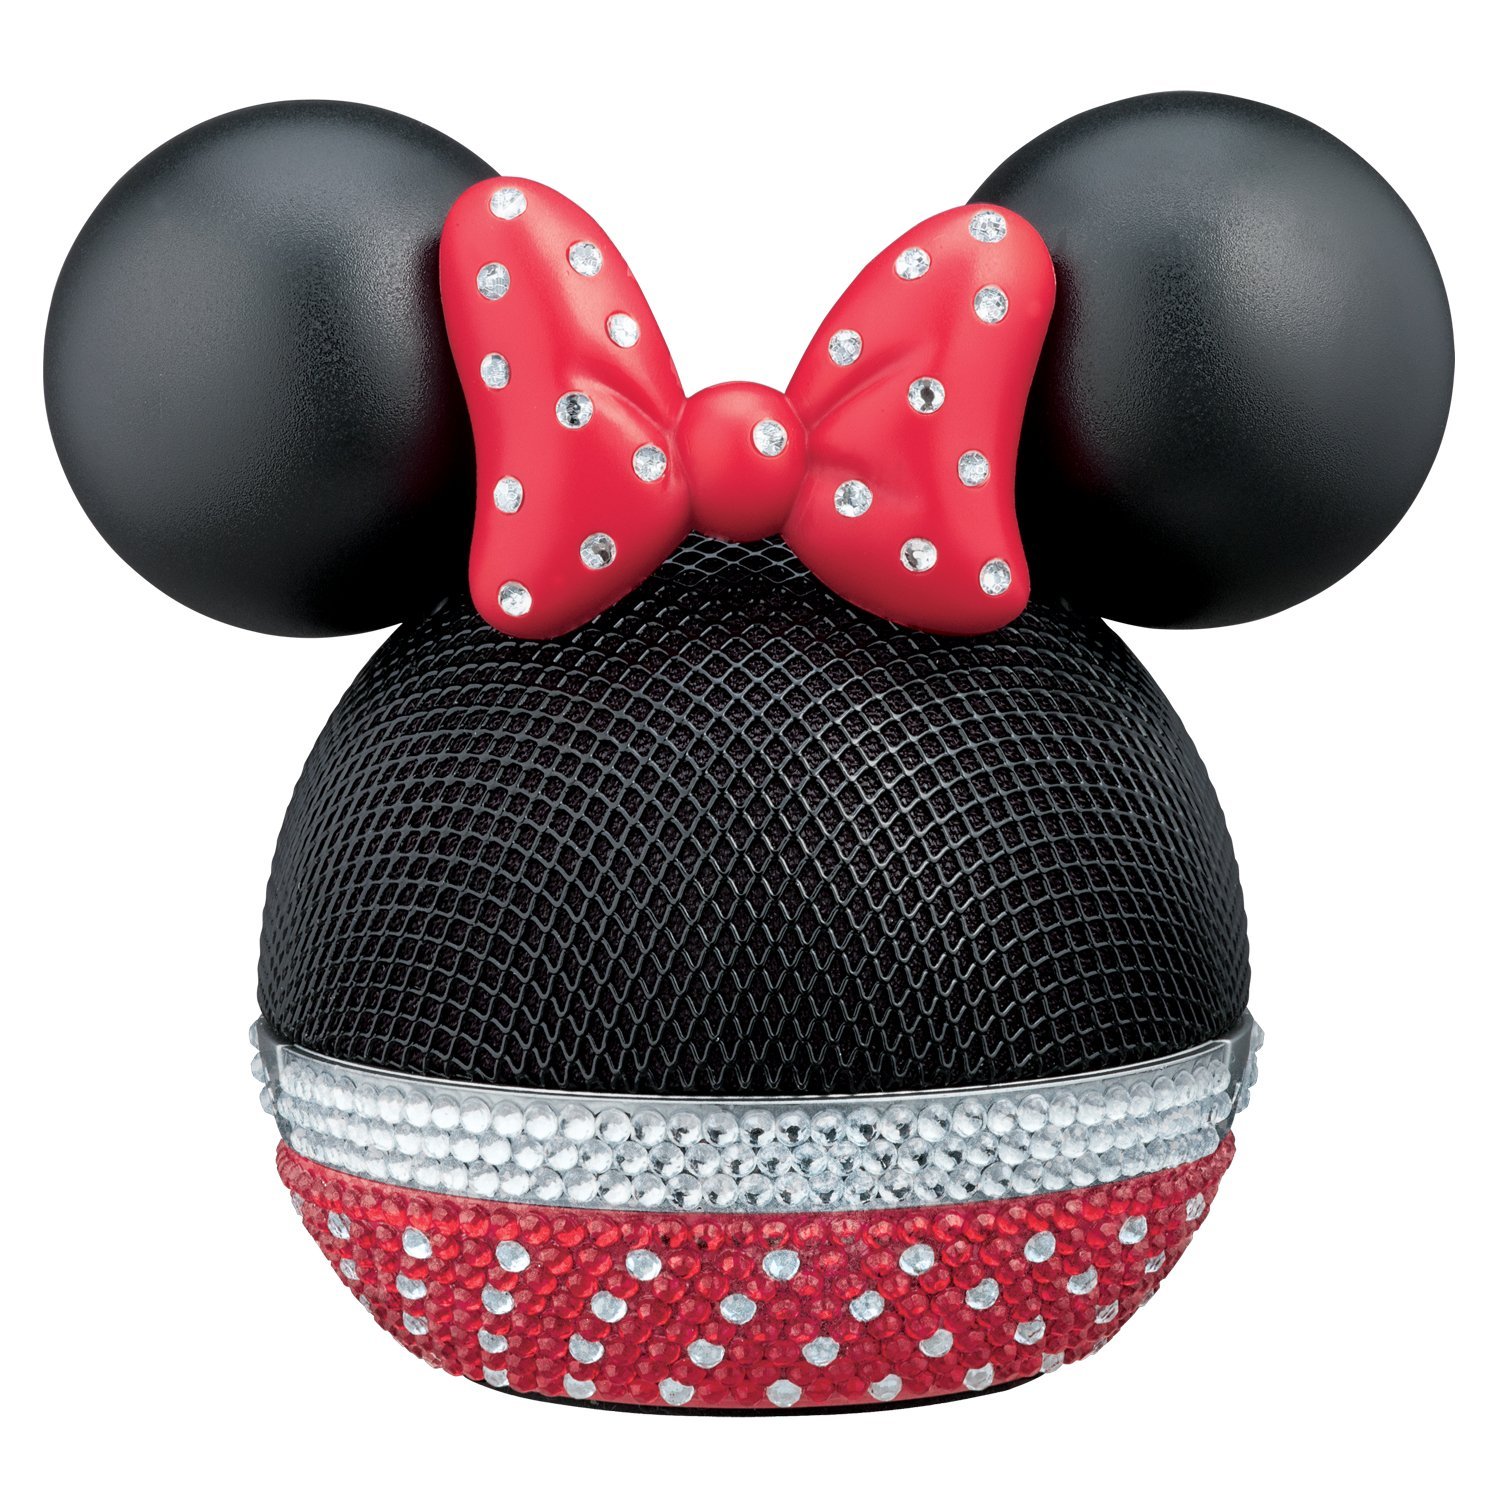 Disney Finds – Minnie Mouse Bluetooth Speaker